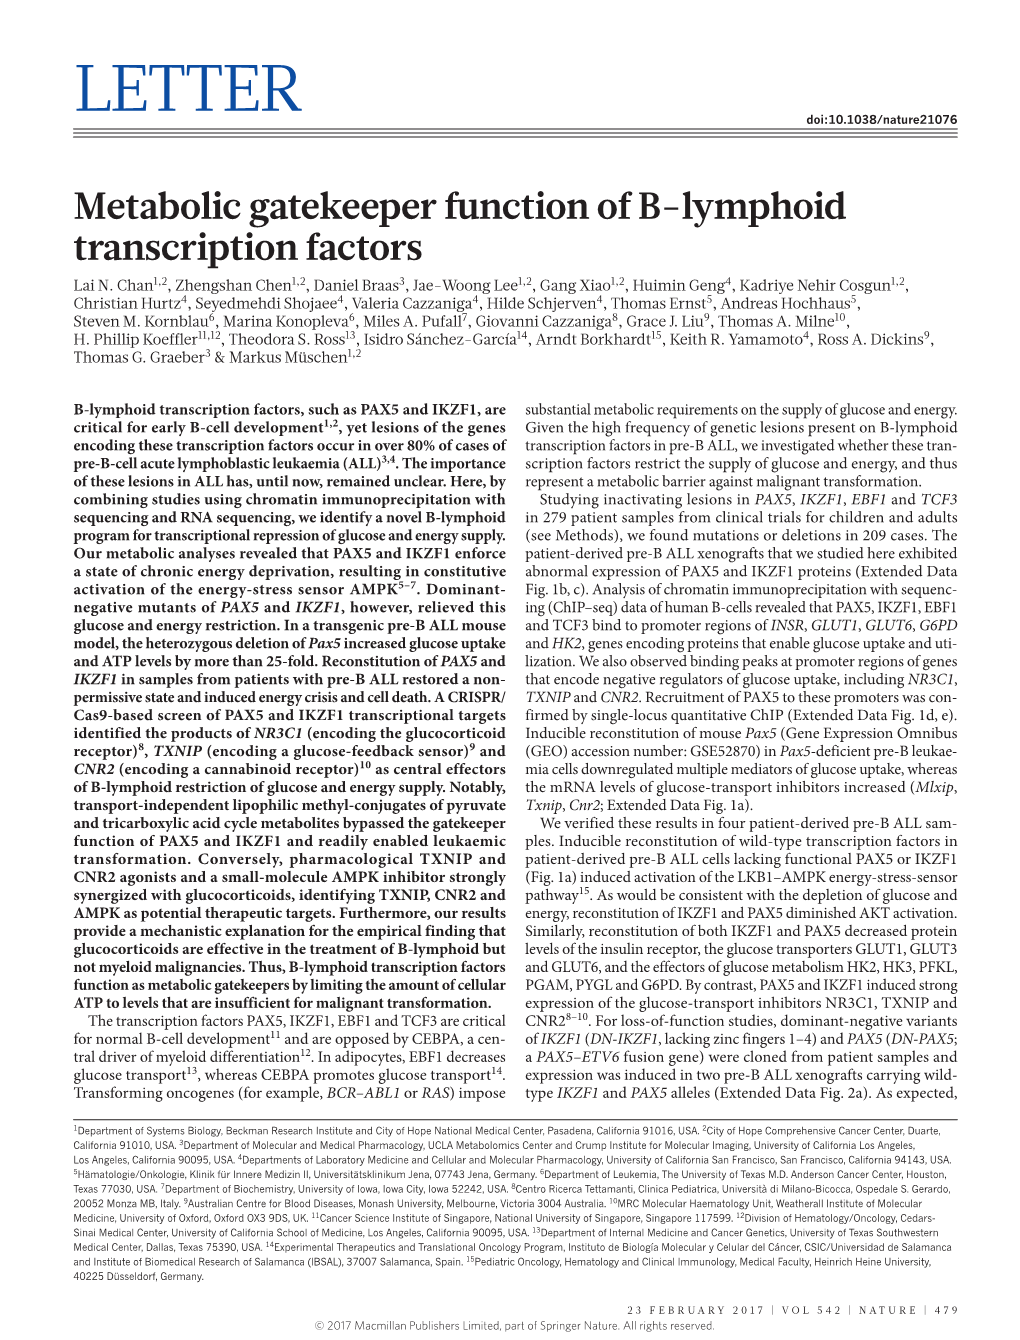 Metabolic Gatekeeper Function of B-Lymphoid Transcription Factors Lai N